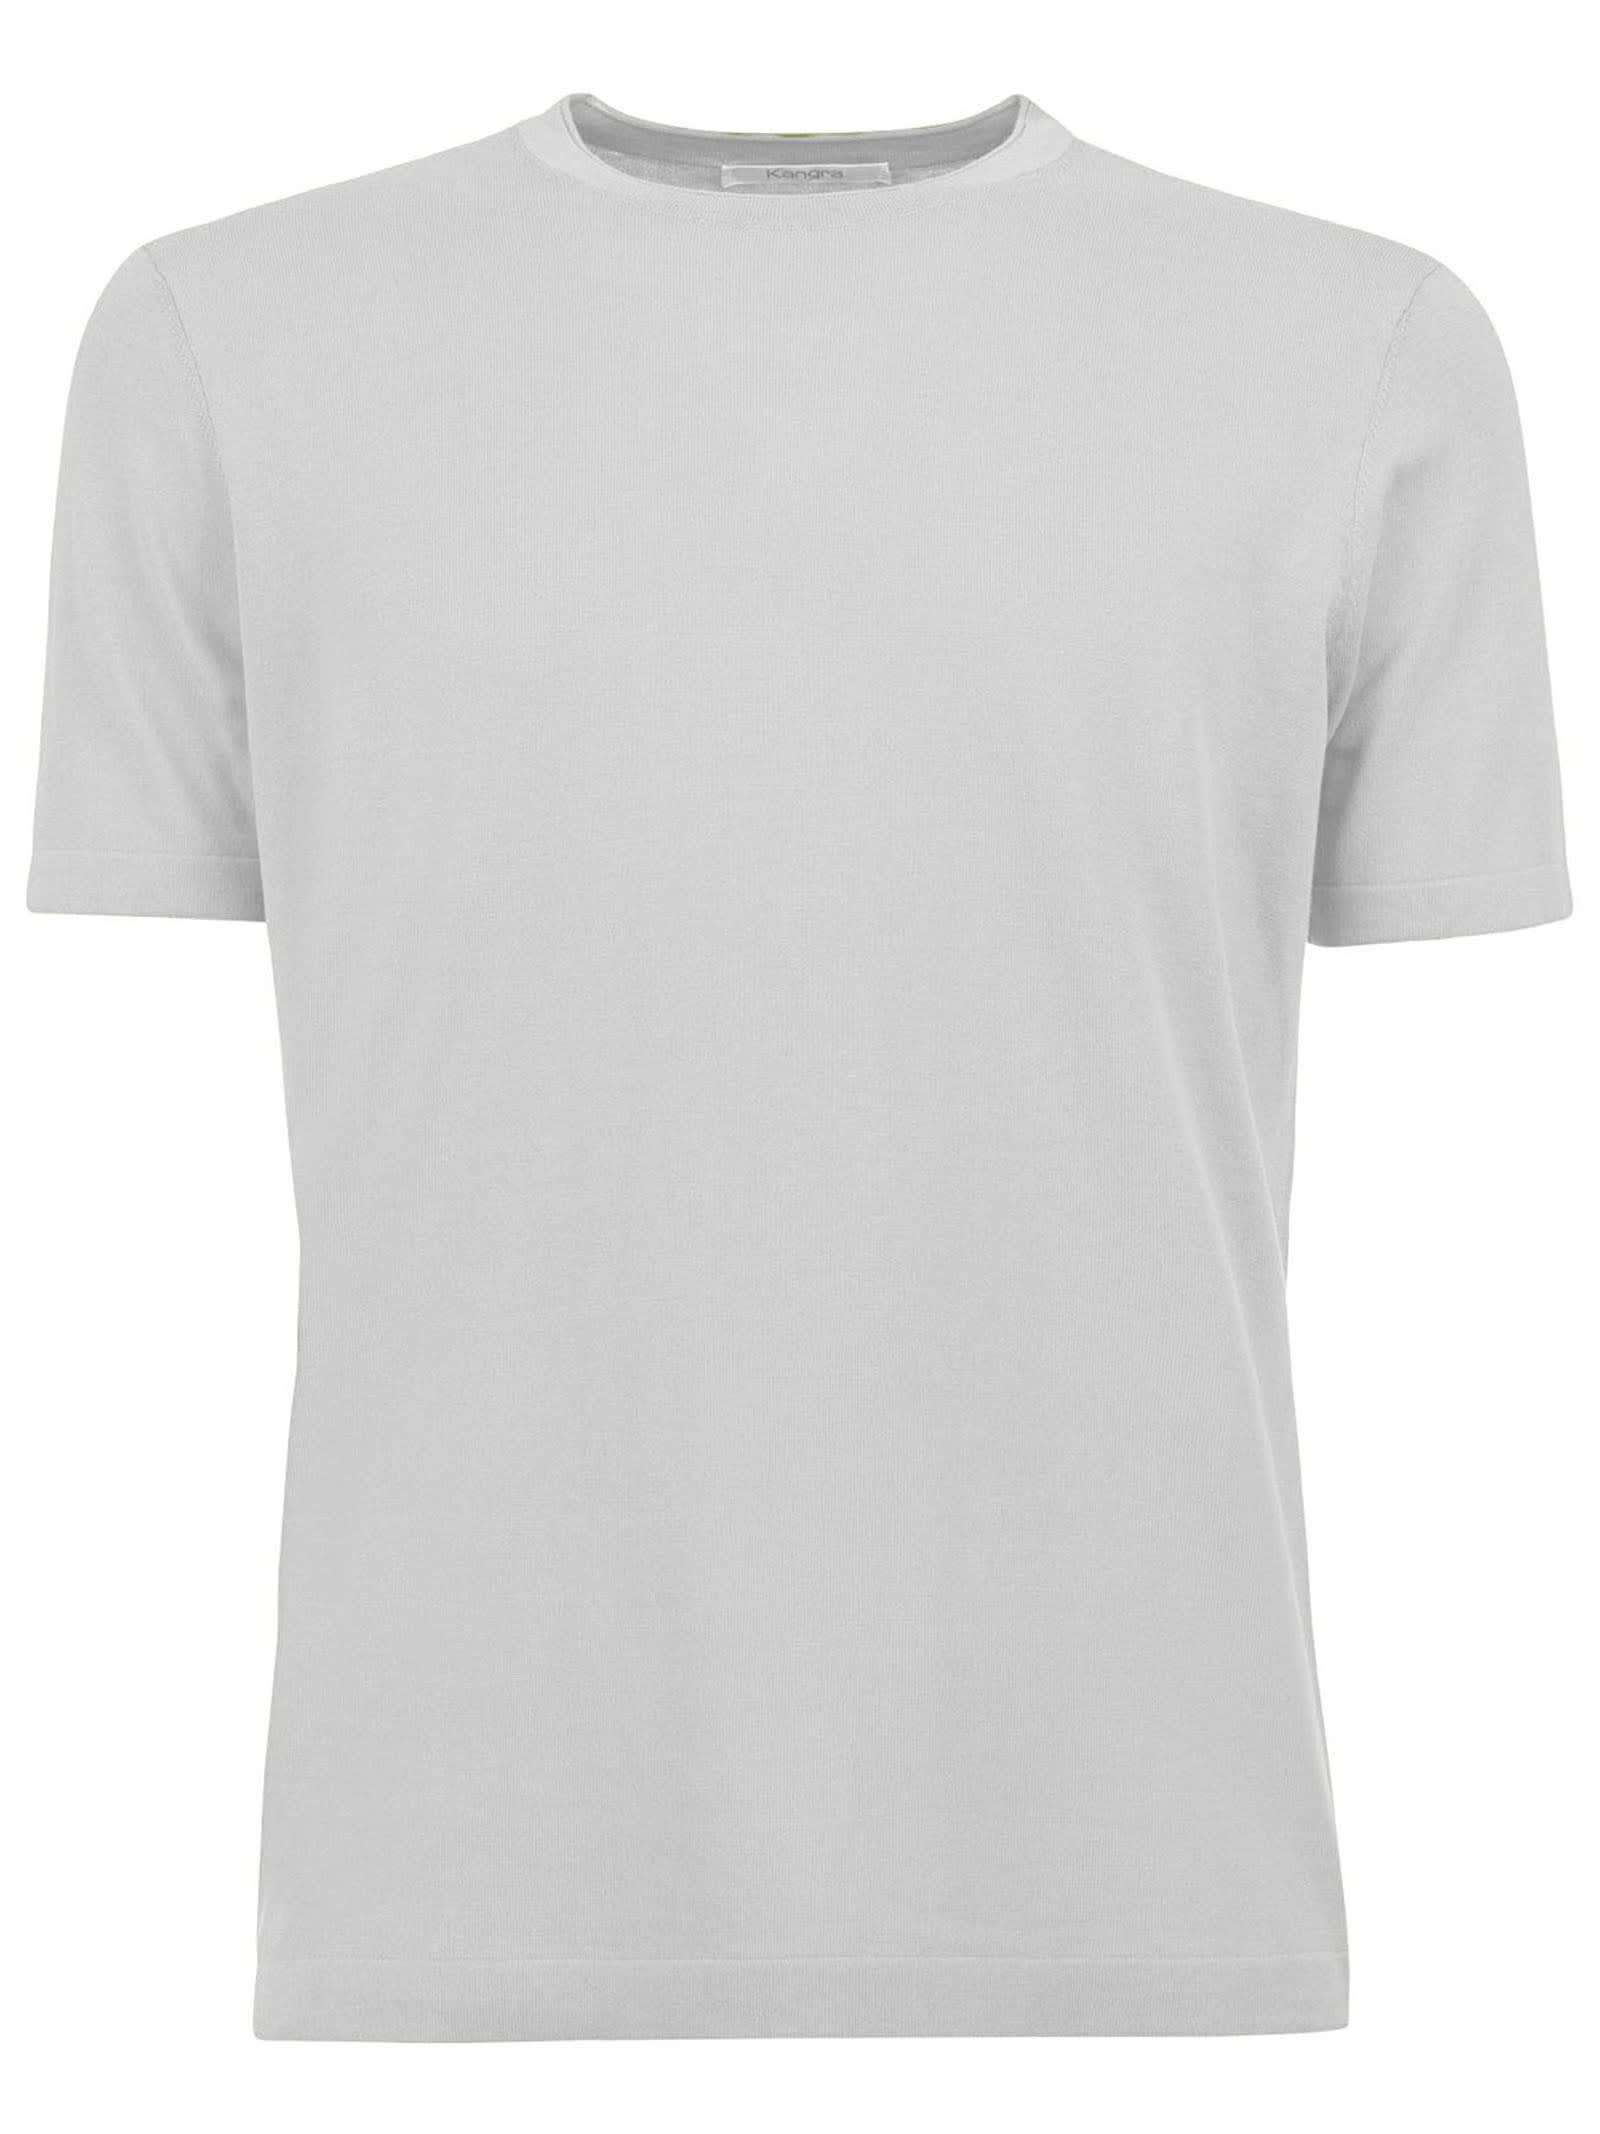 White Cotton Ribbed T-shirt